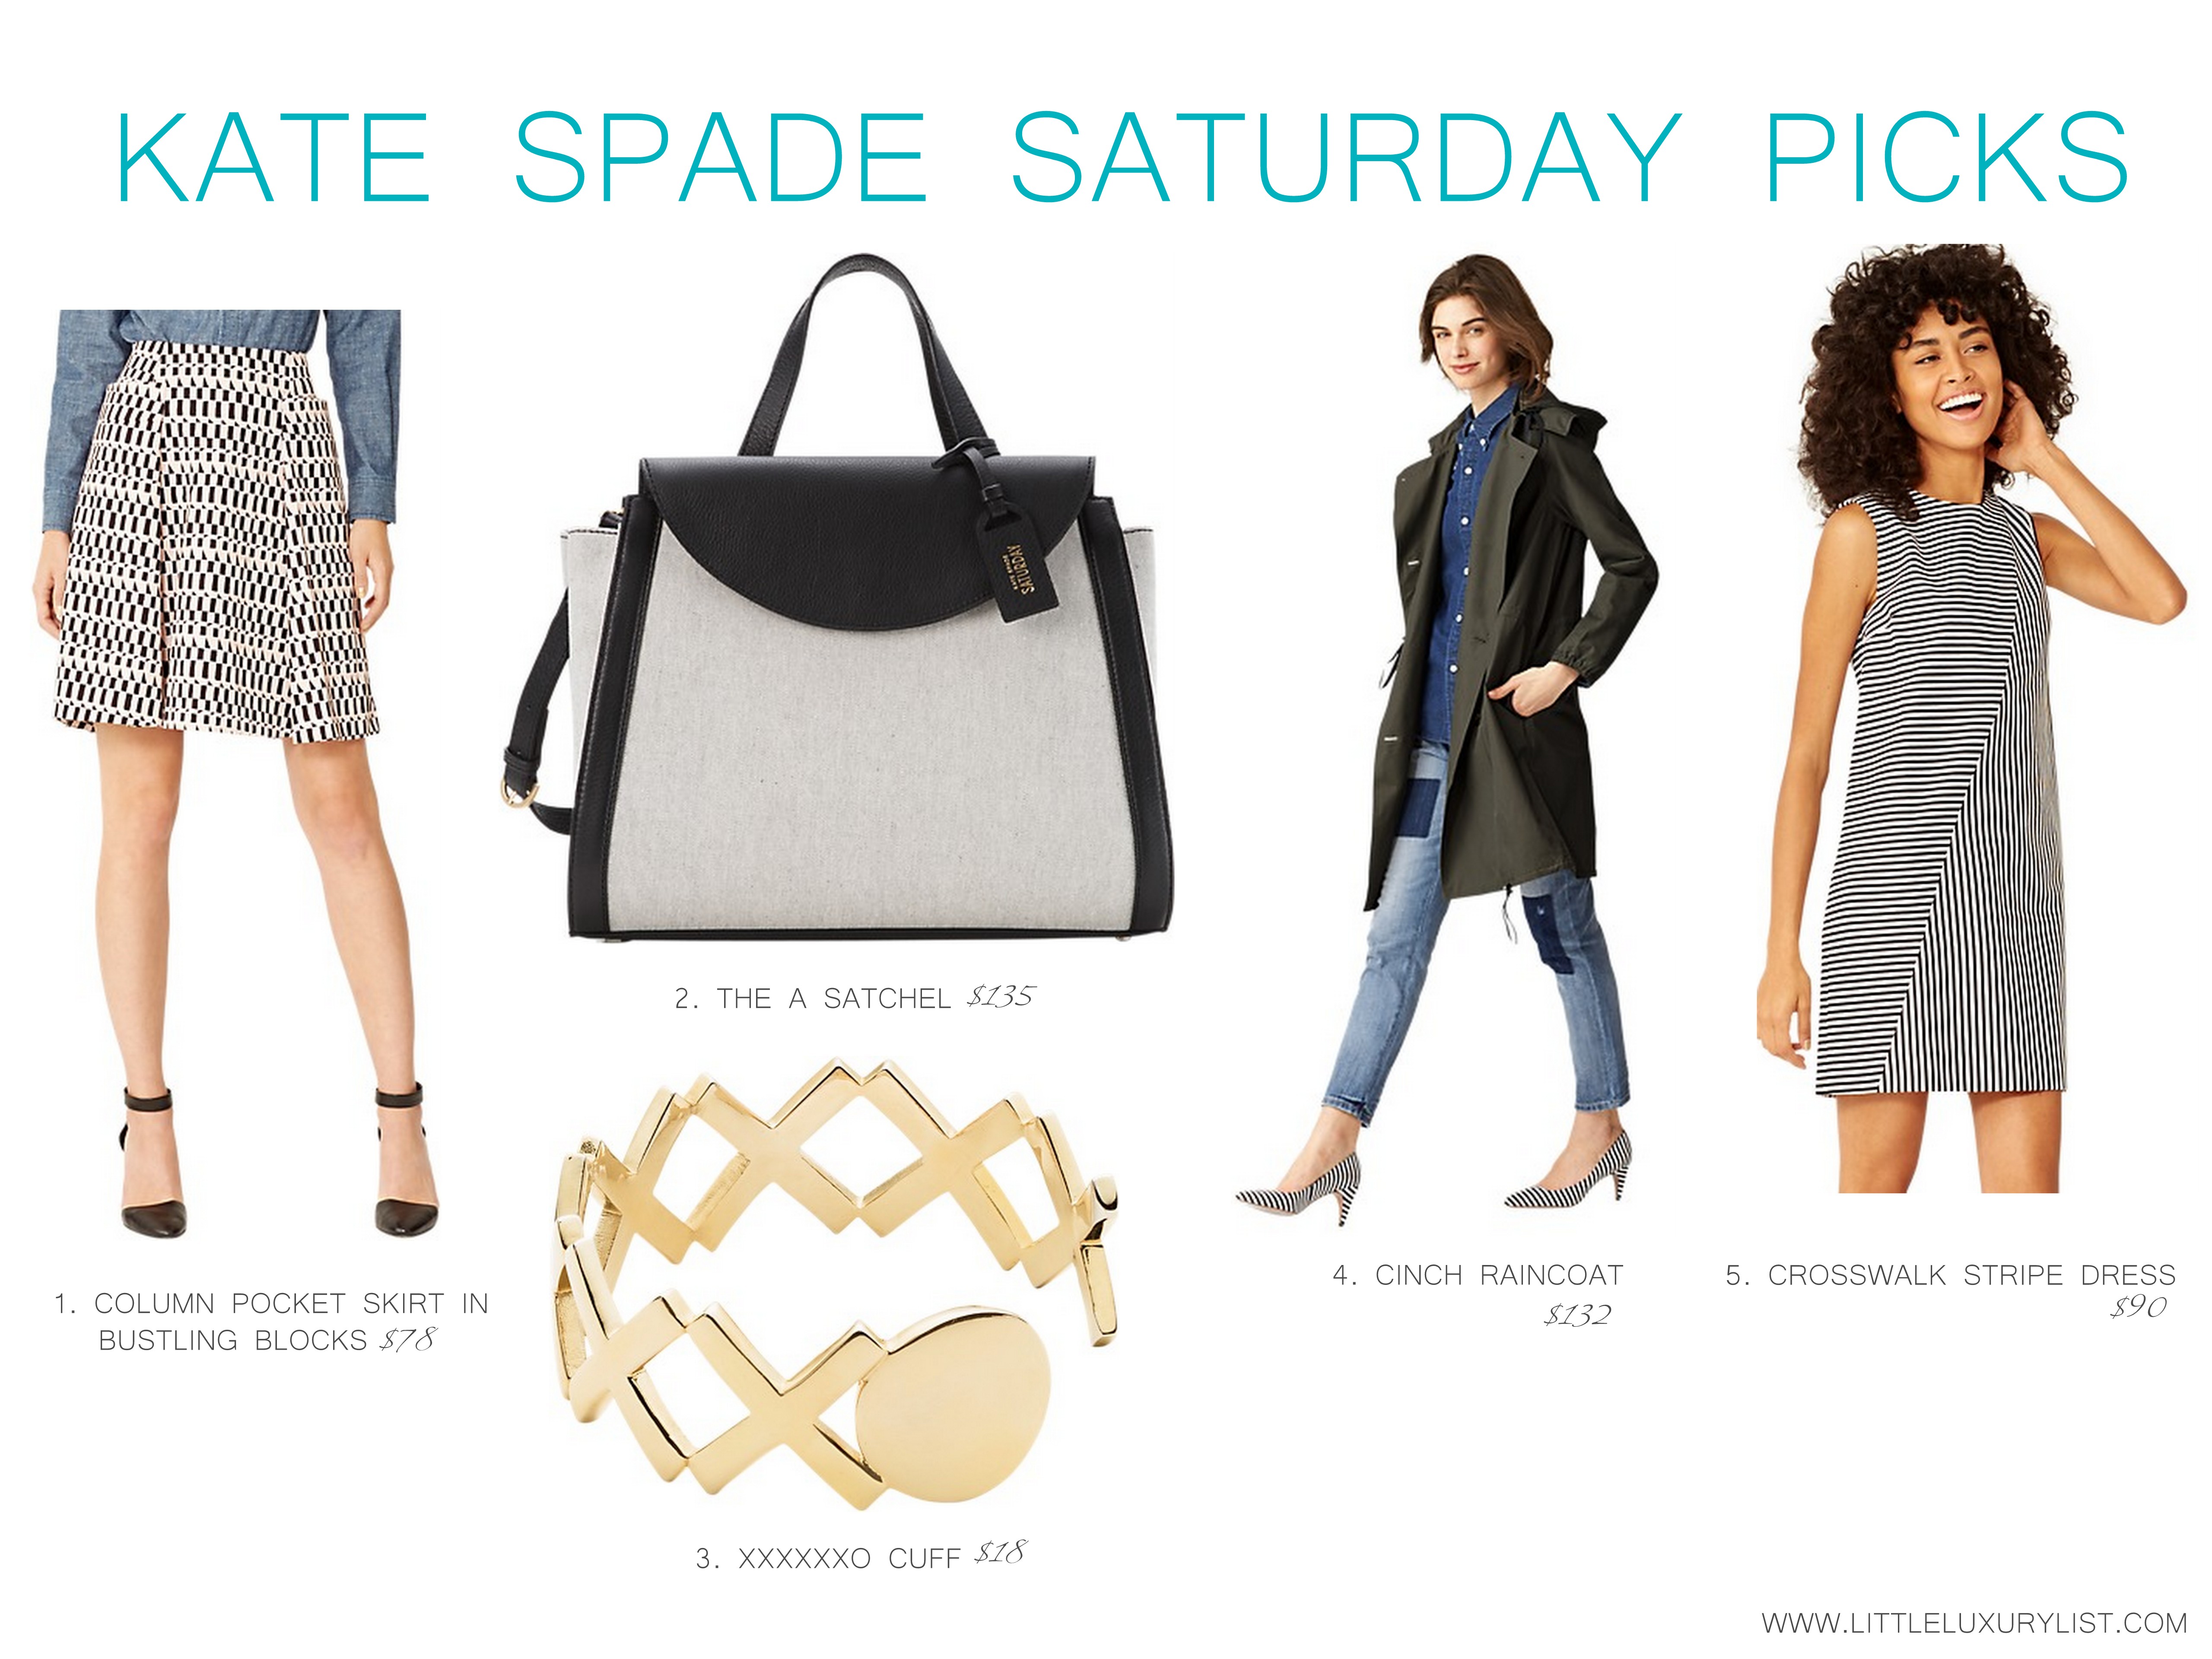 Kate Spade Saturday Picks by little luxury list